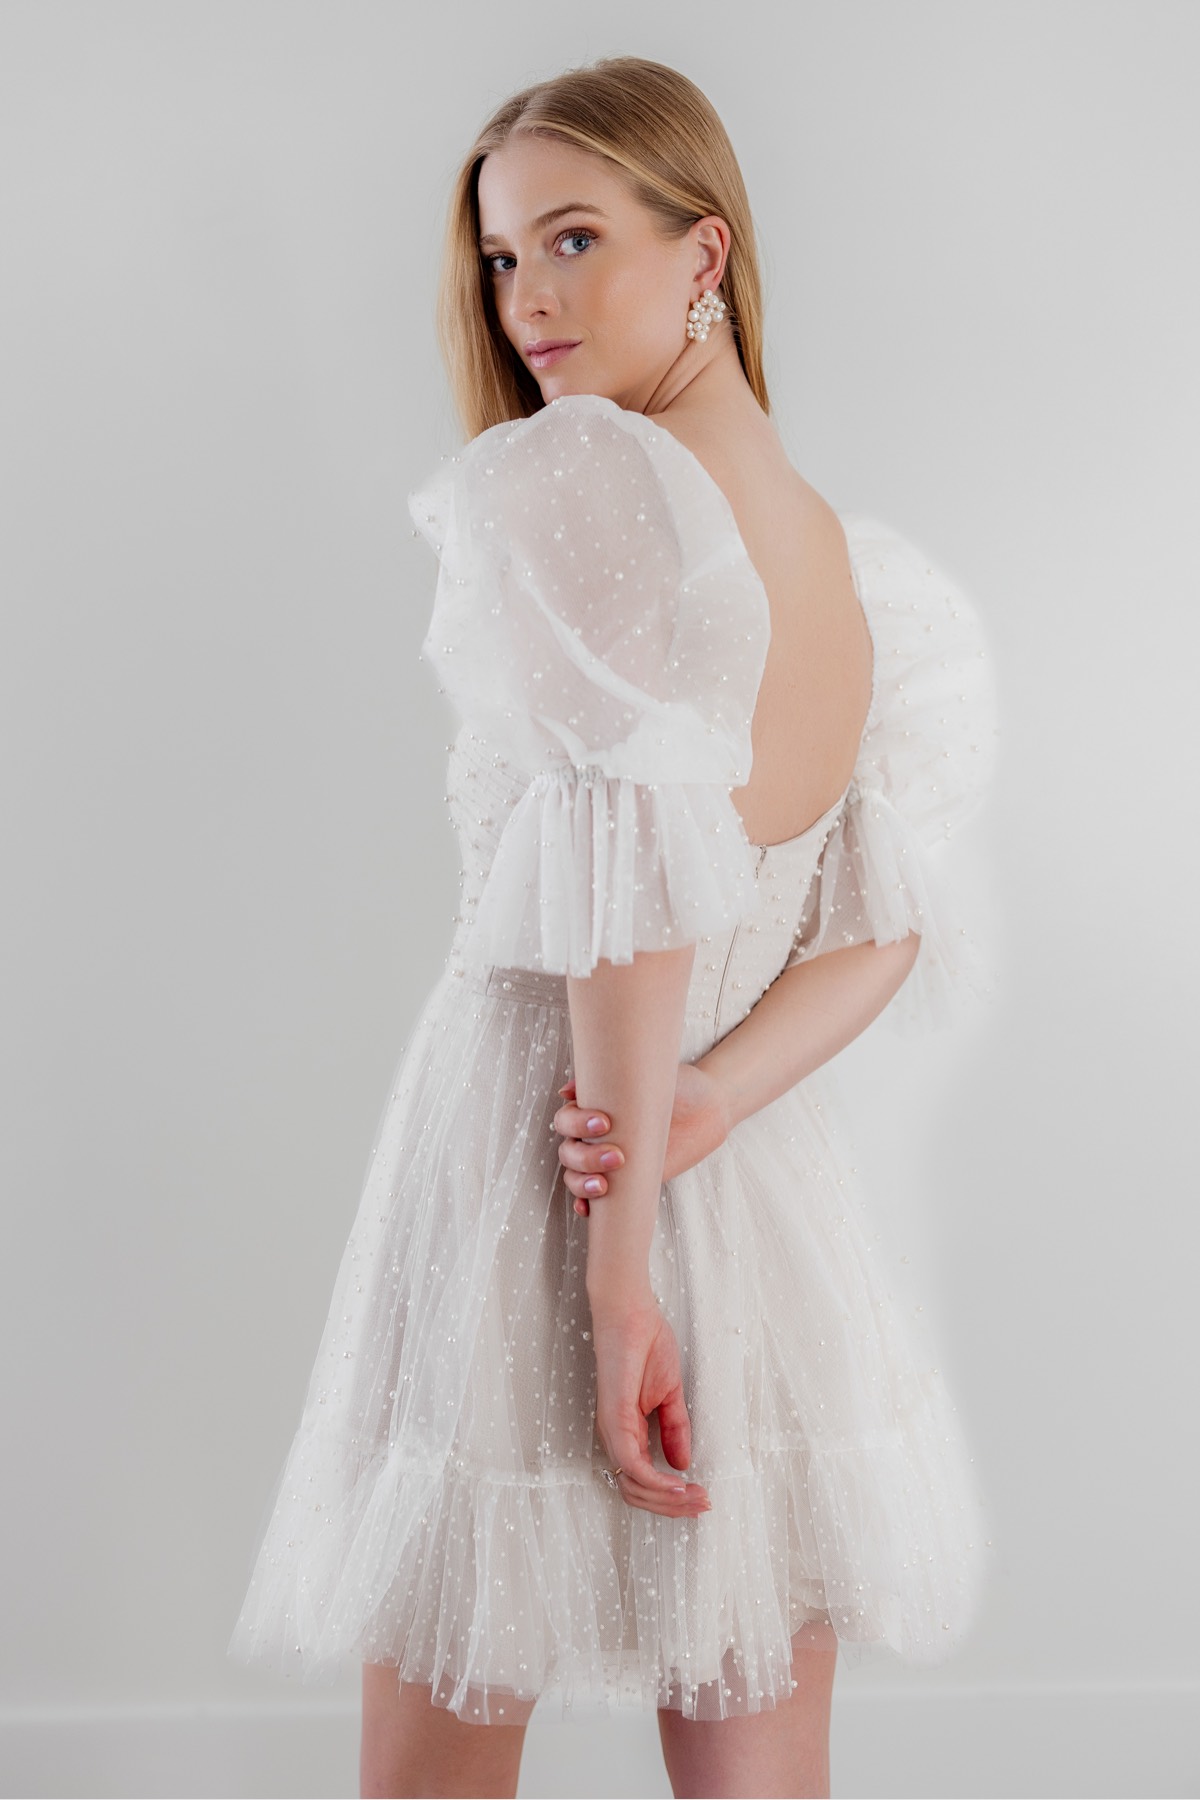 By Watters Macaron Wedding Dress Save 34% - Stillwhite